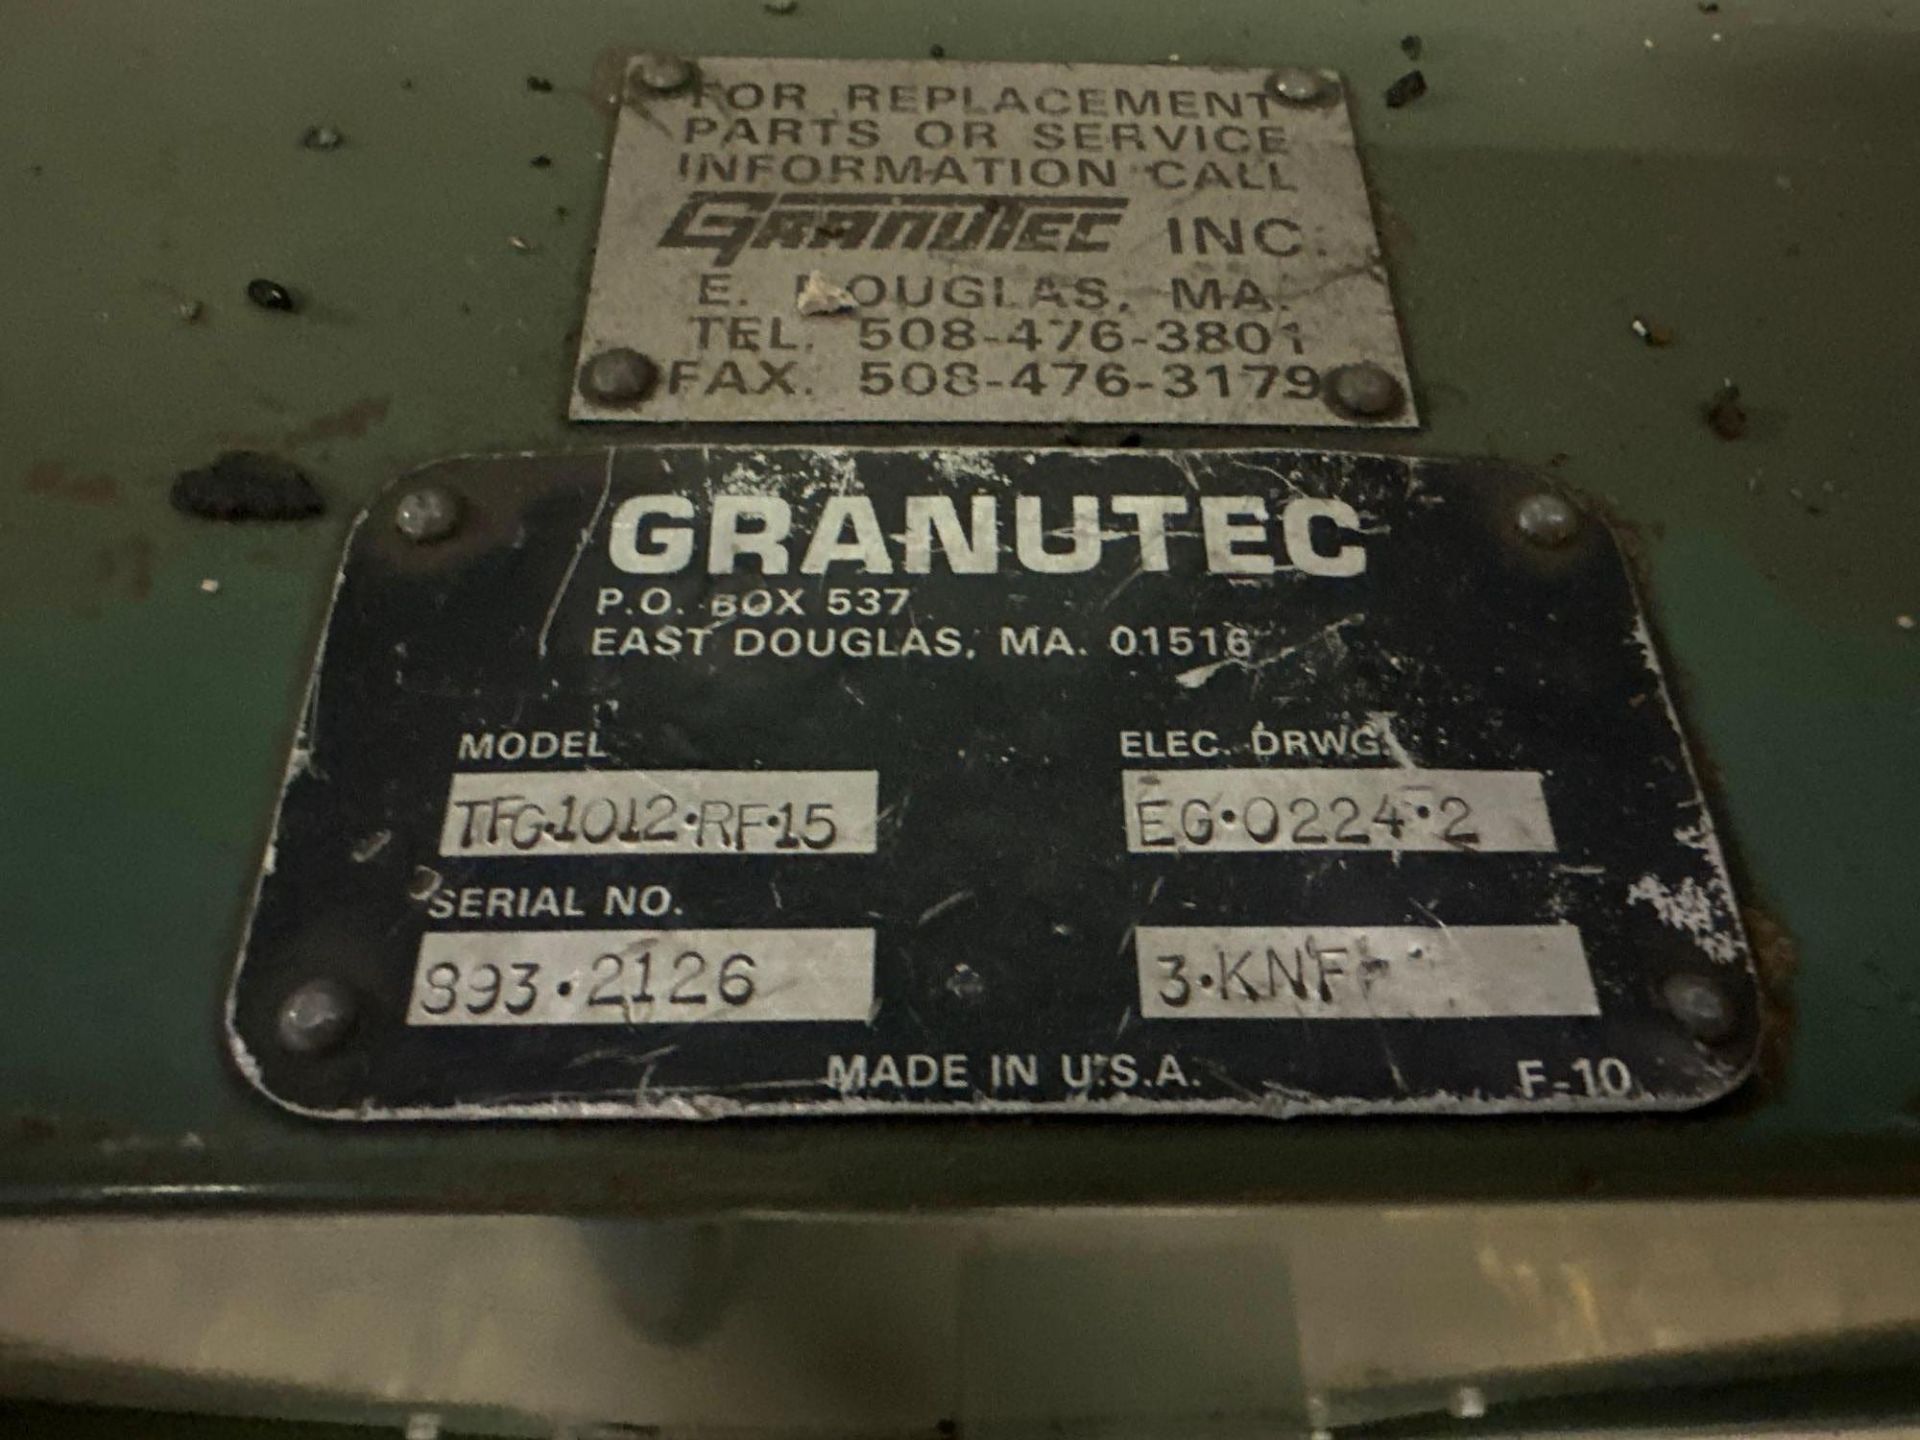 Granutec TFG.1012.RF.15 Granulator, s/n 893.2126 - Image 6 of 6